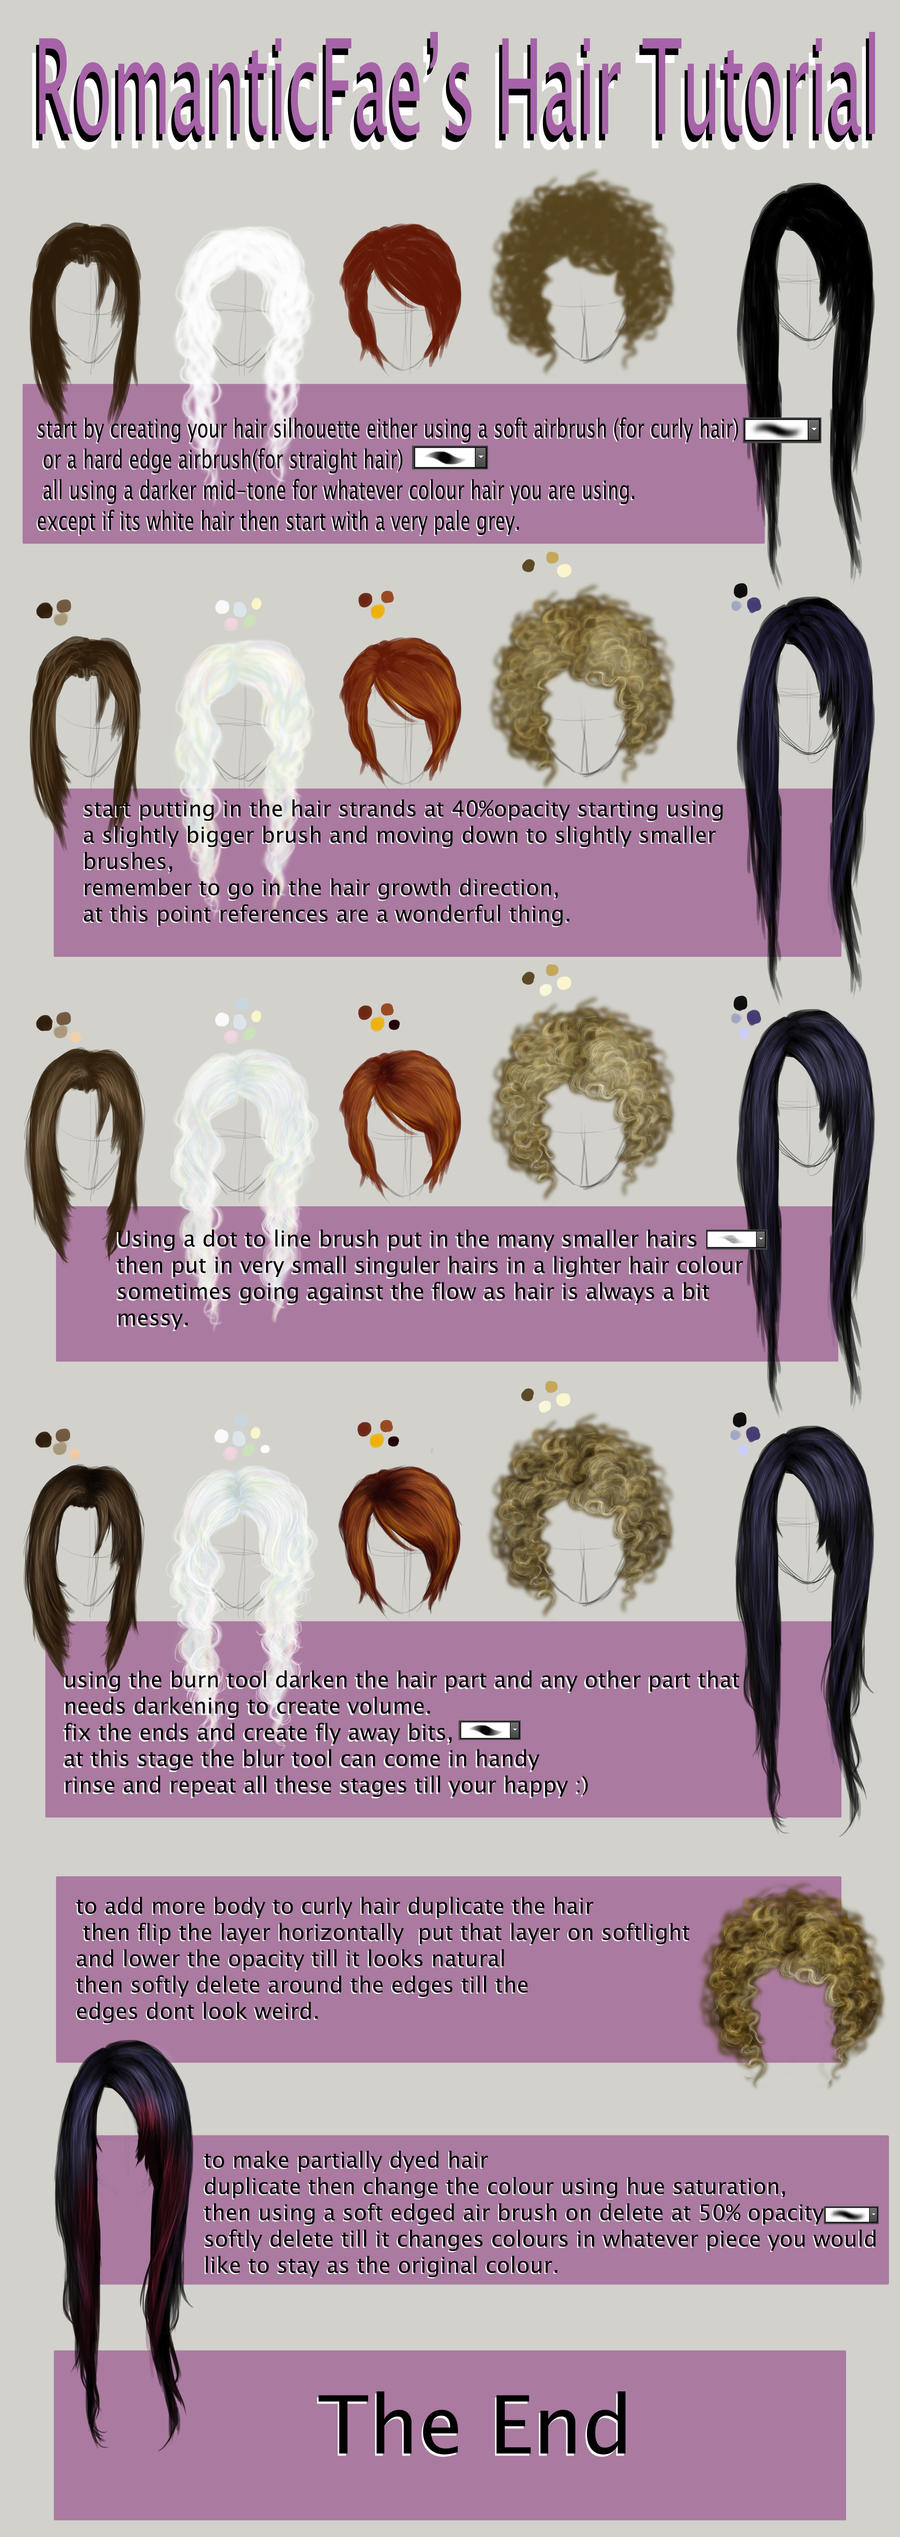 Hair Tutorial by RomanticFae on DeviantArt